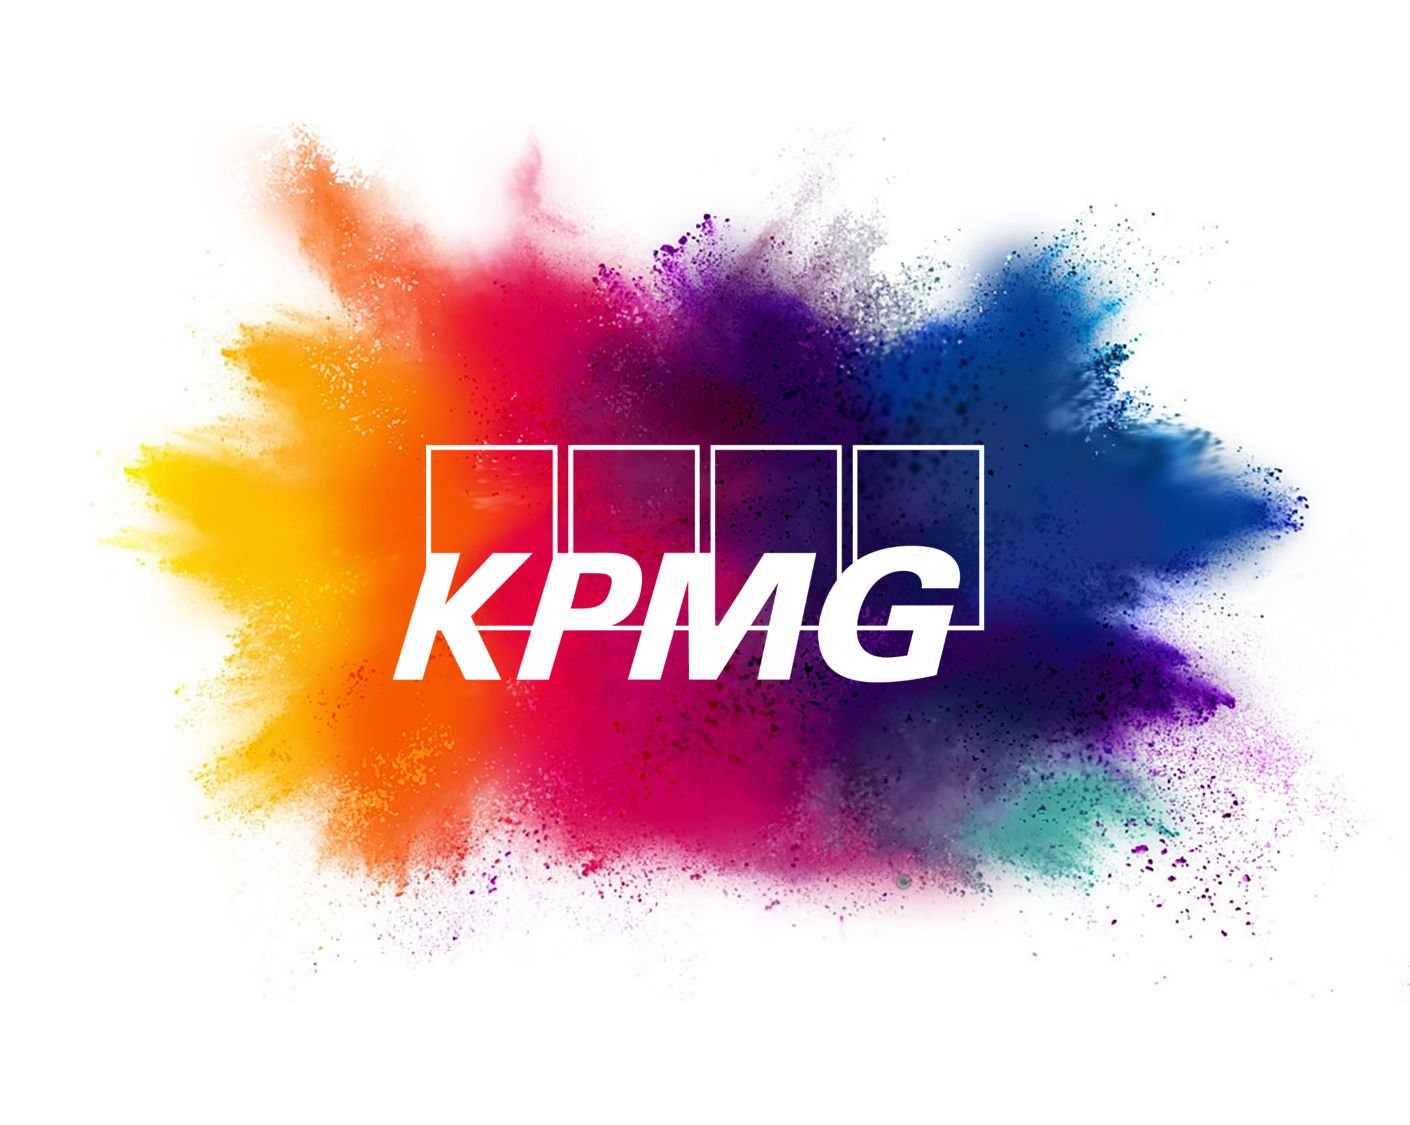 kpmg-splash-image.jpeg